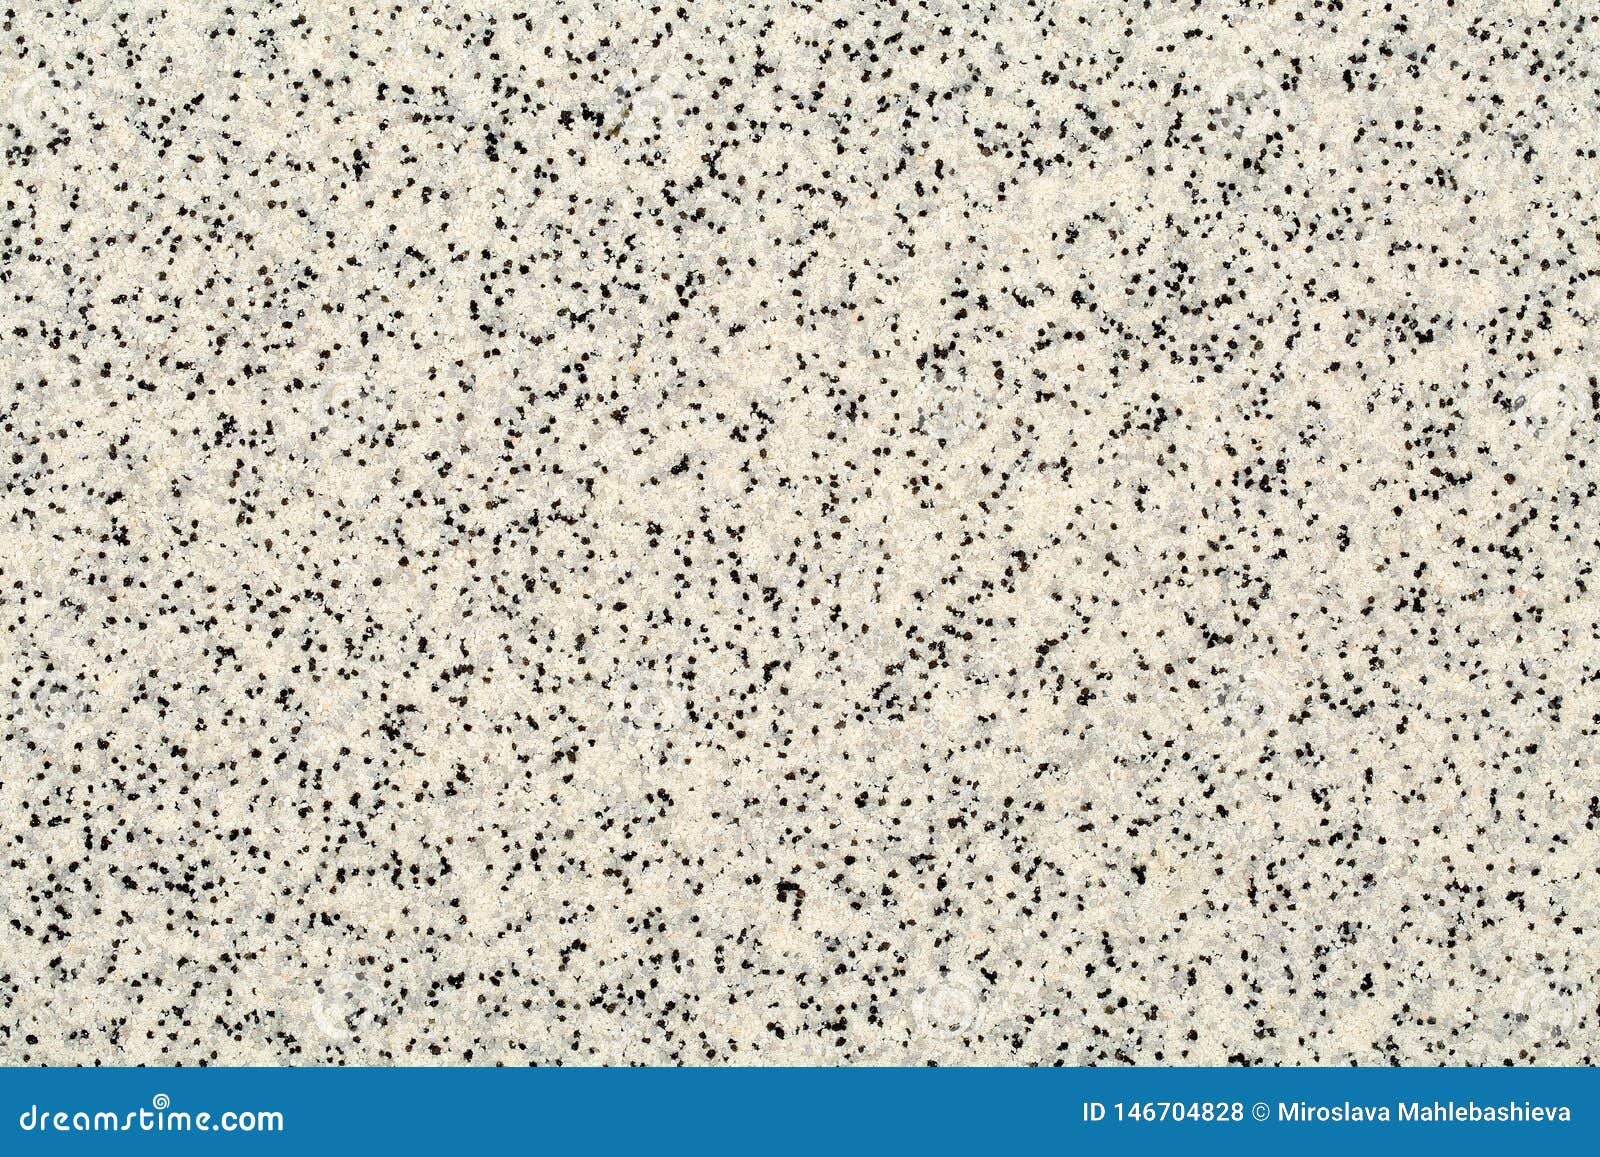 Extreme Close Up Of Decorative Quartz Sand Epoxy Floor Or Wall